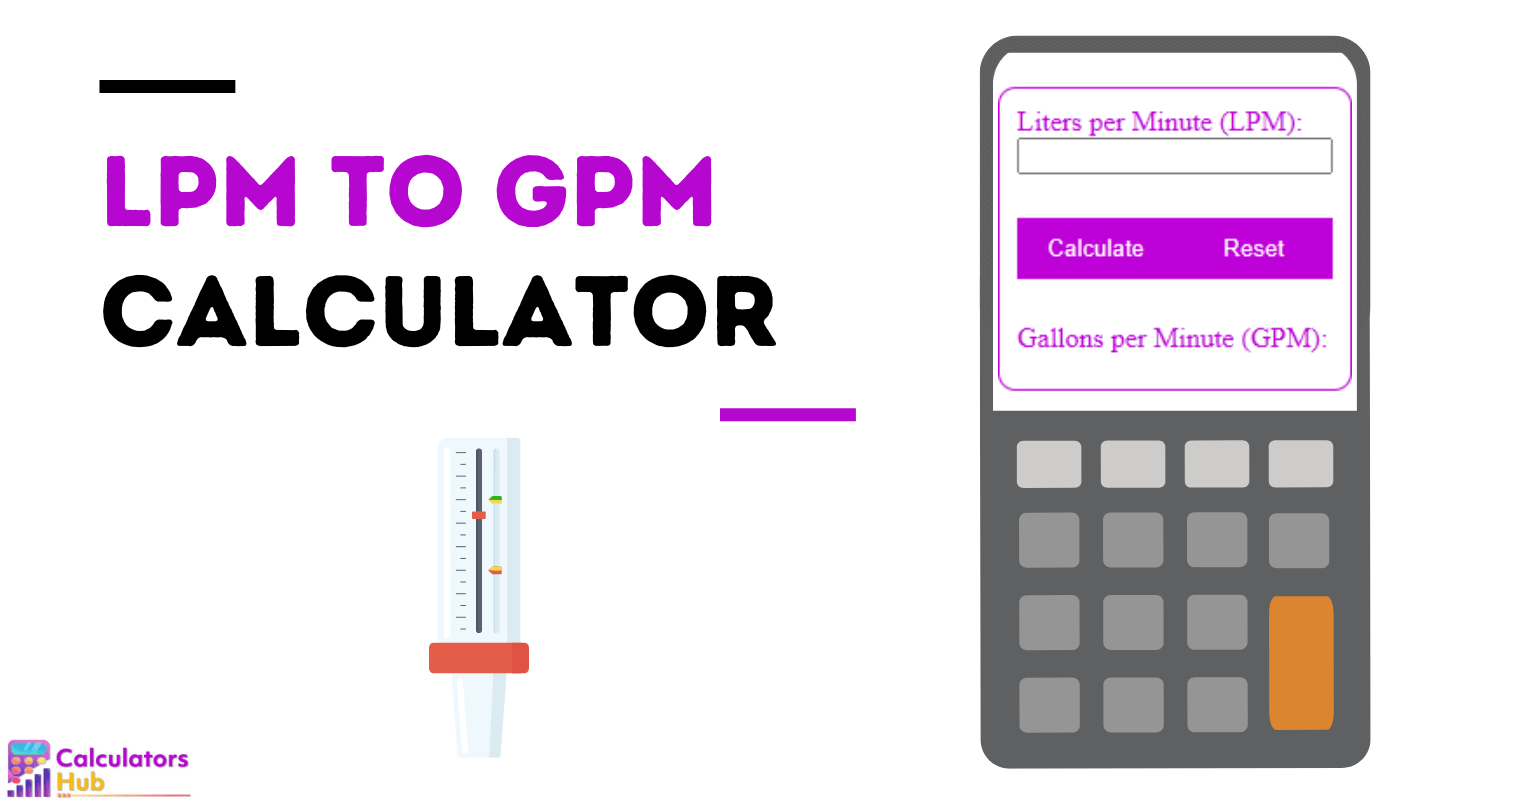 Calculadora de LPM para GPM